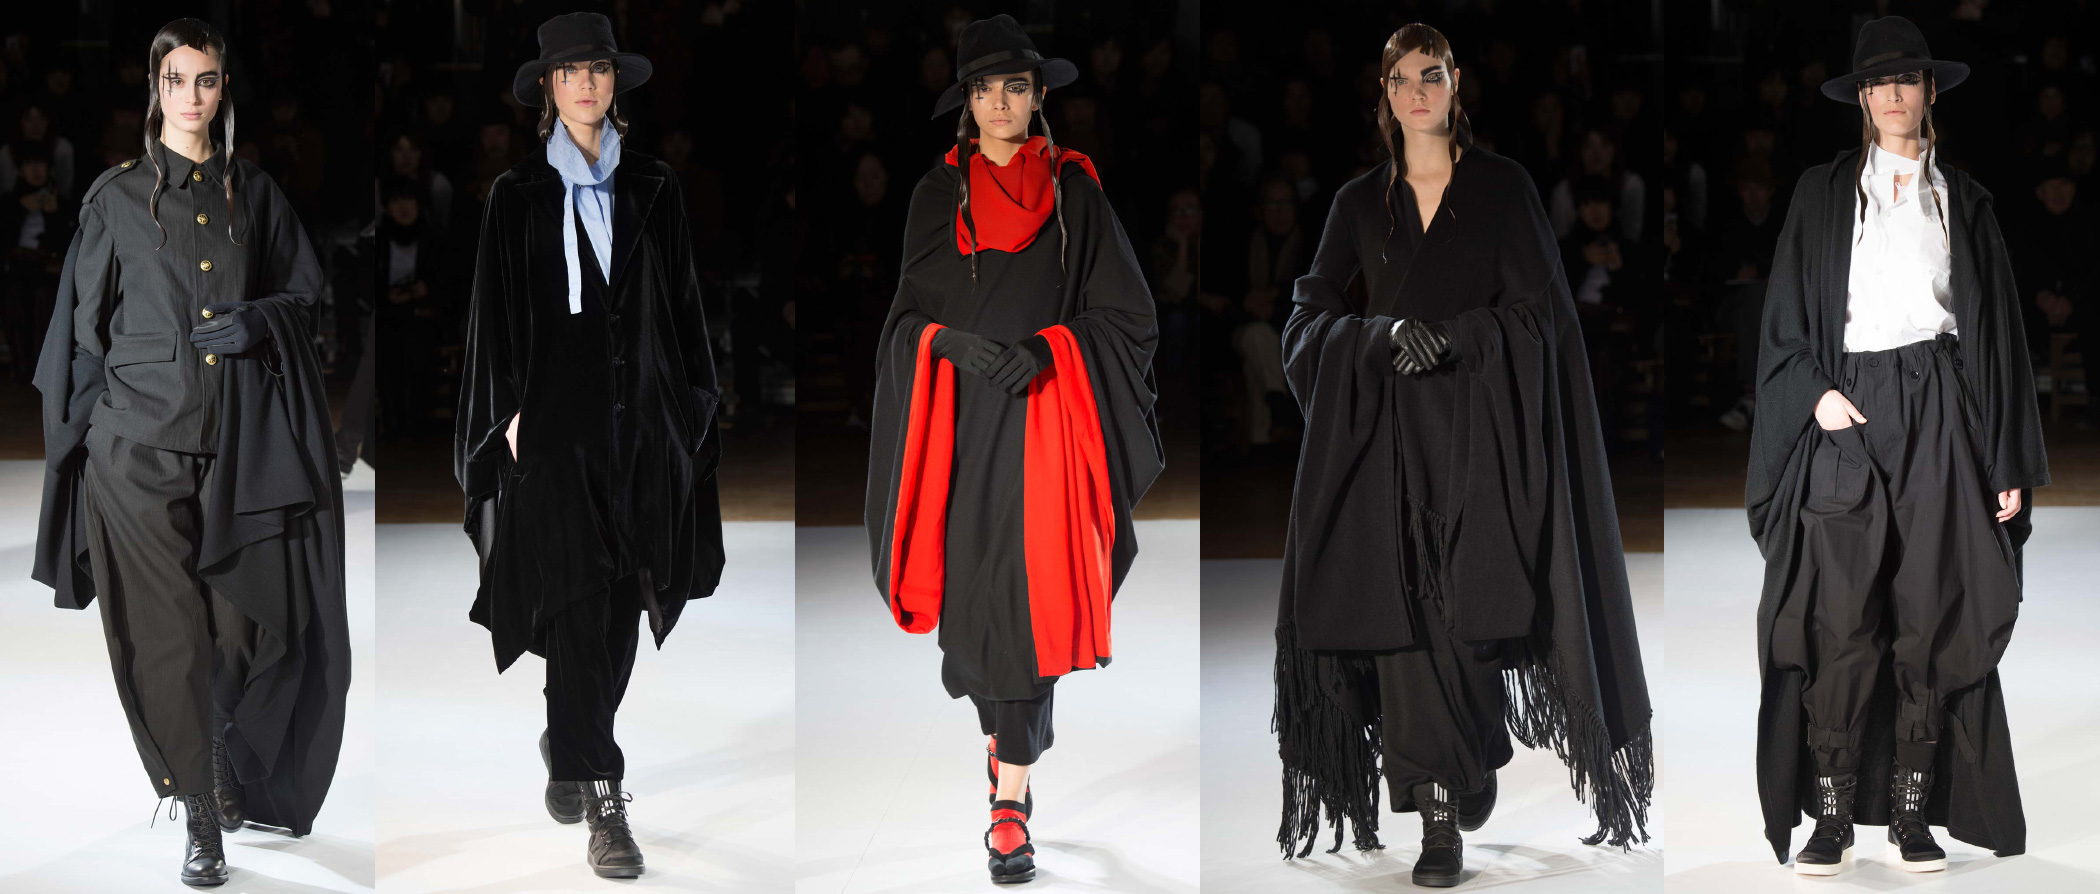 The Rosenrot | For The Love of Avant-Garde Fashion | Fashion blog ...